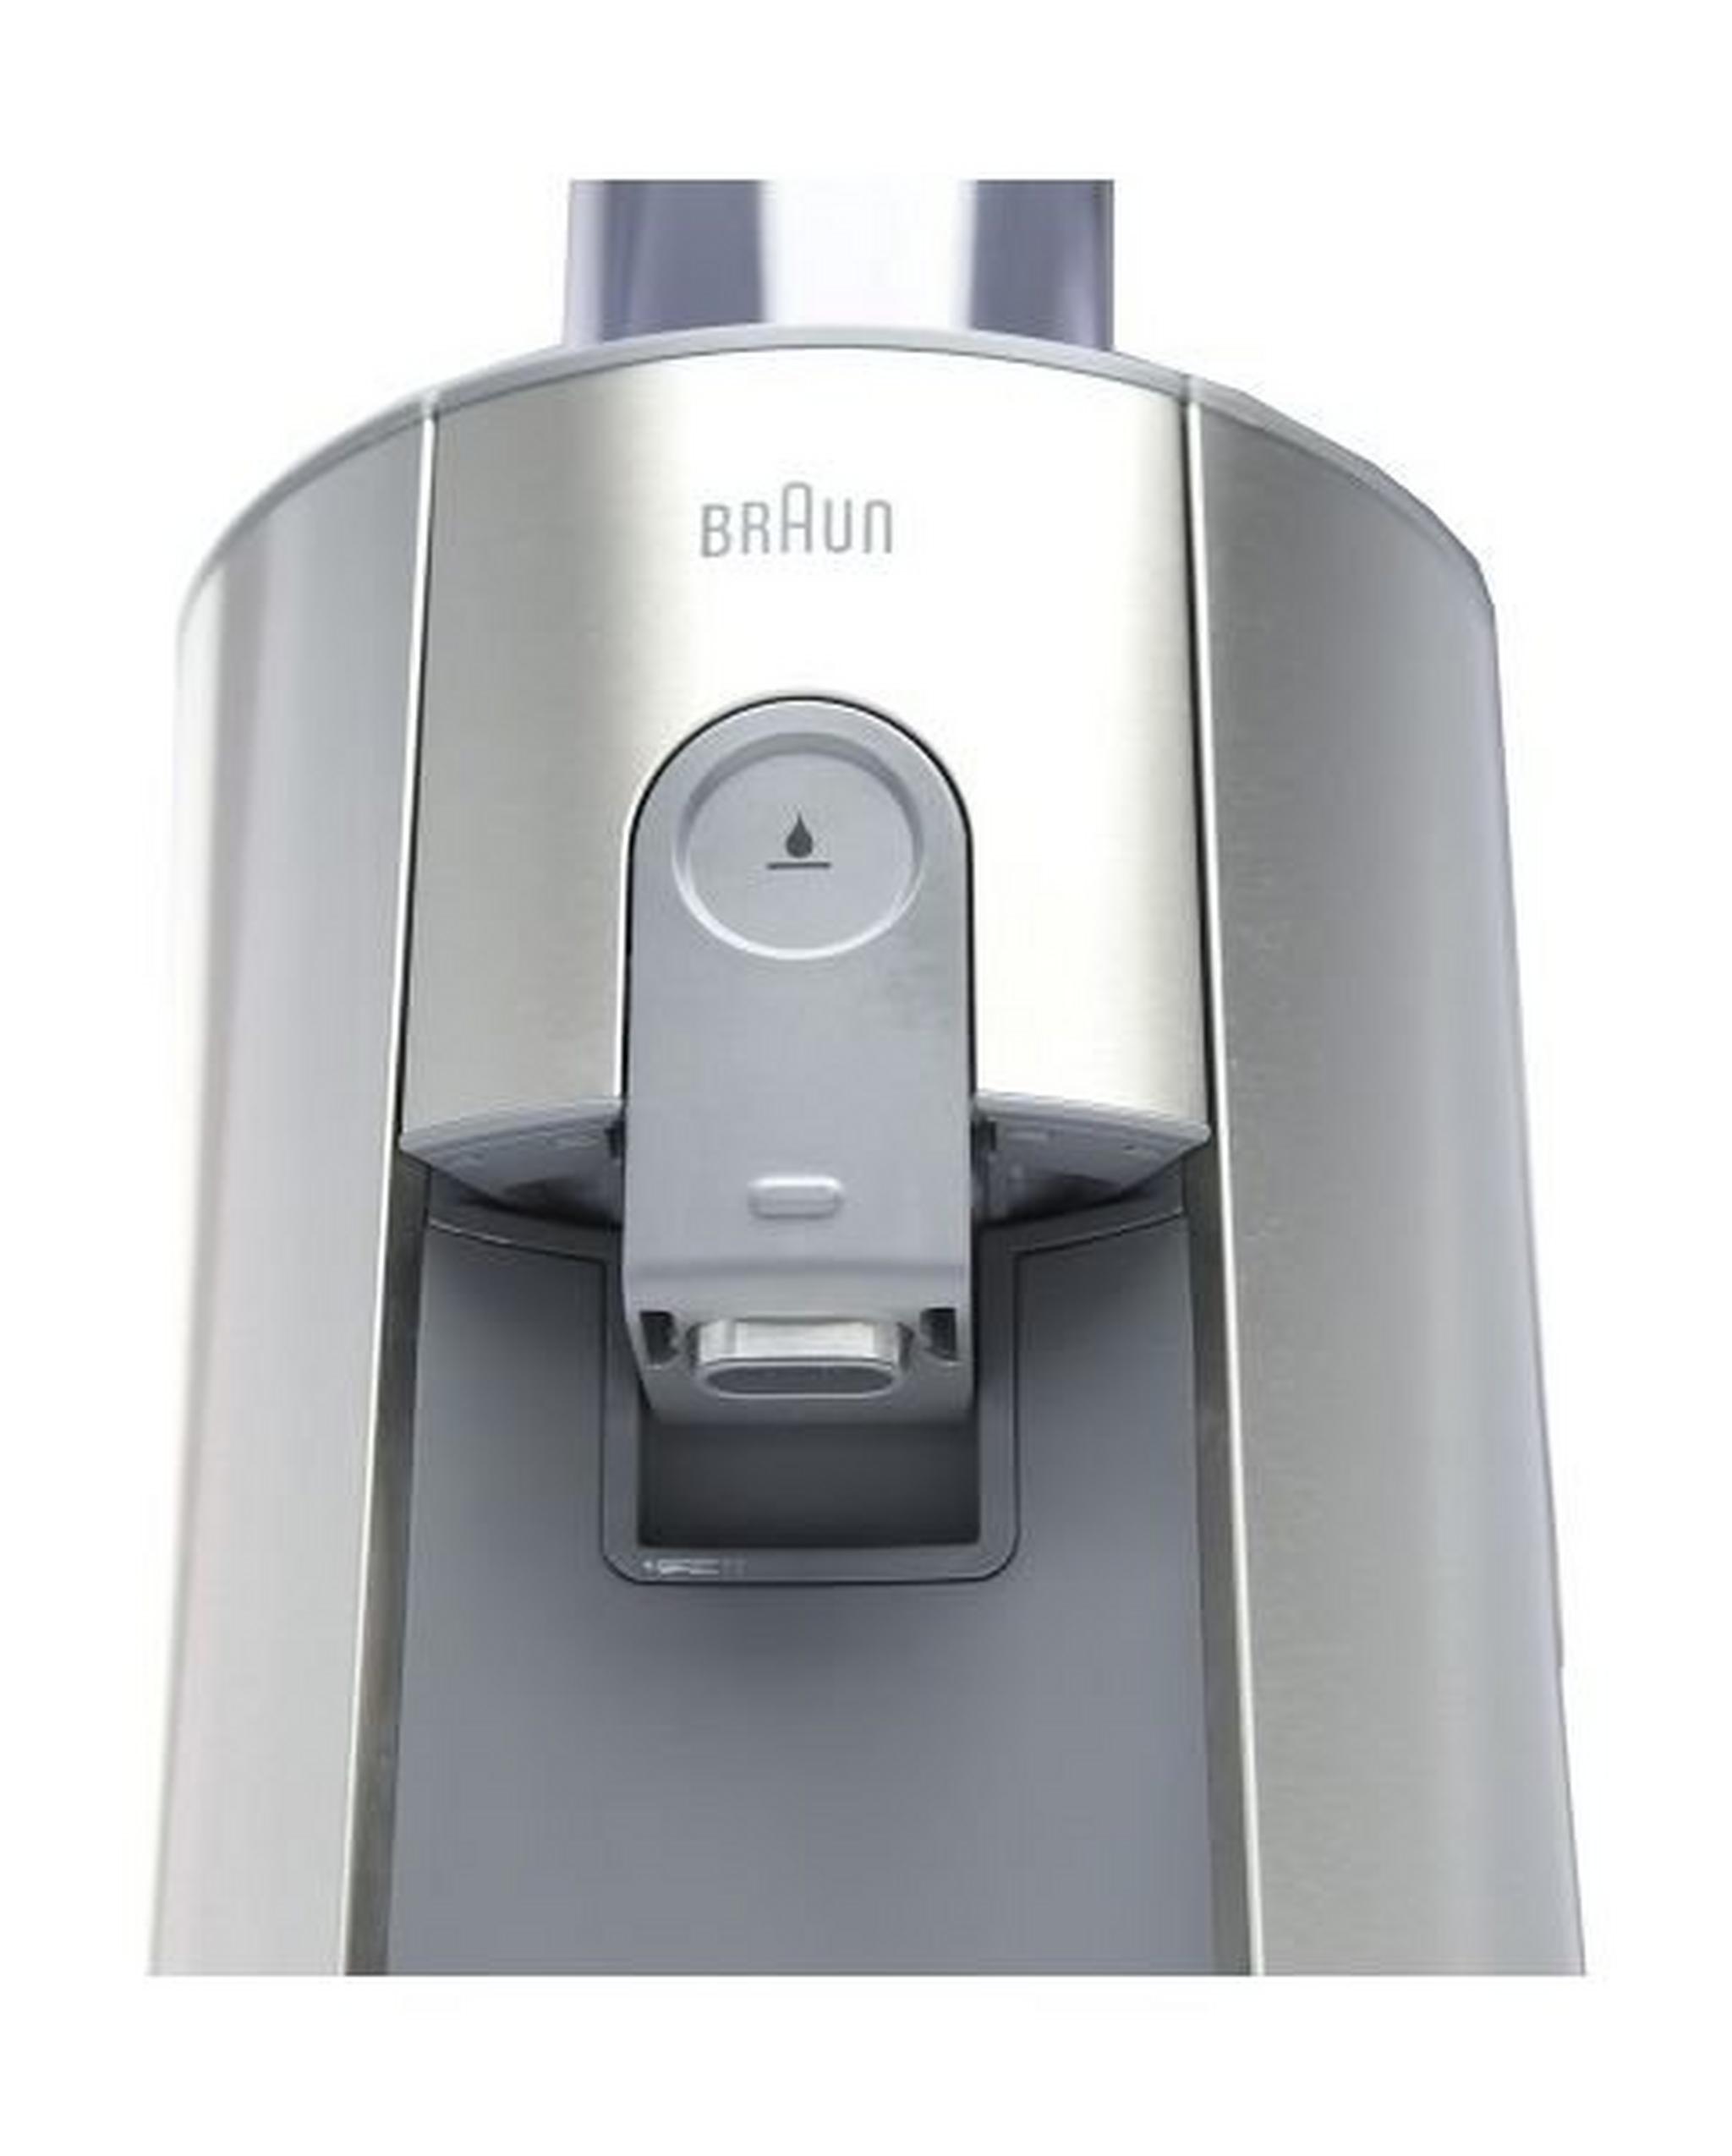 Braun 1000W 1.25L Multiquick 7- Spin Juicer (J700) - Stainless steel/Grey